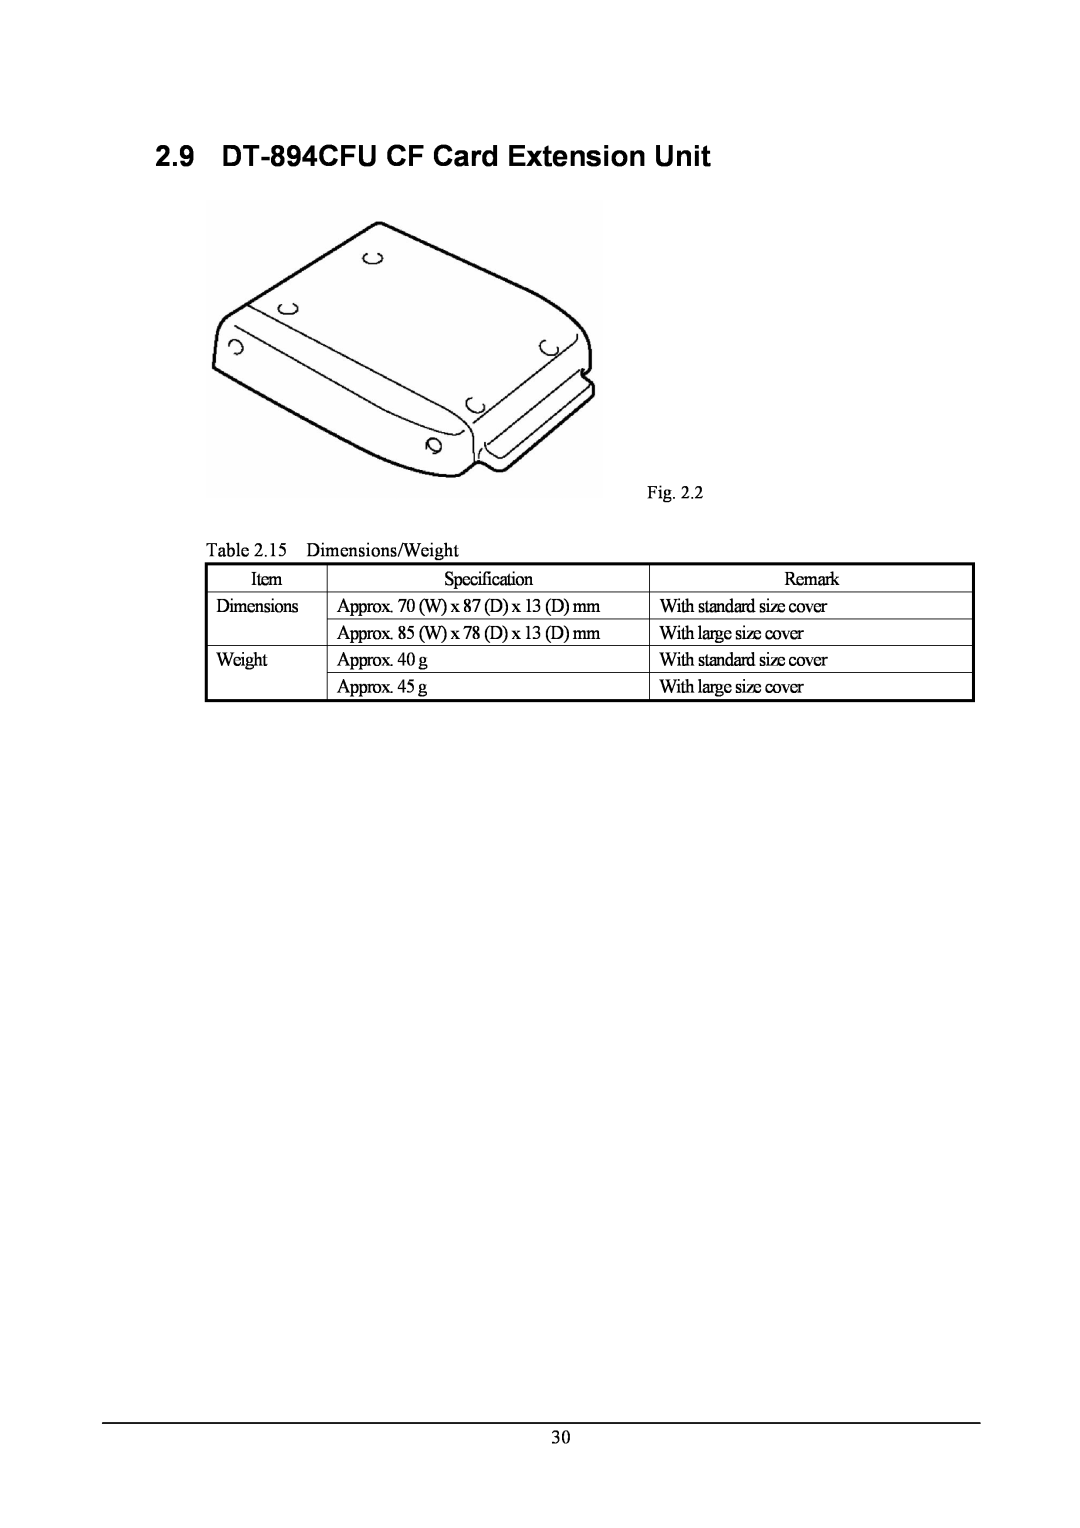 Casio handheld terminals, DT-X11 Series manual 2.9 DT-894CFU CF Card Extension Unit, Dimensions 